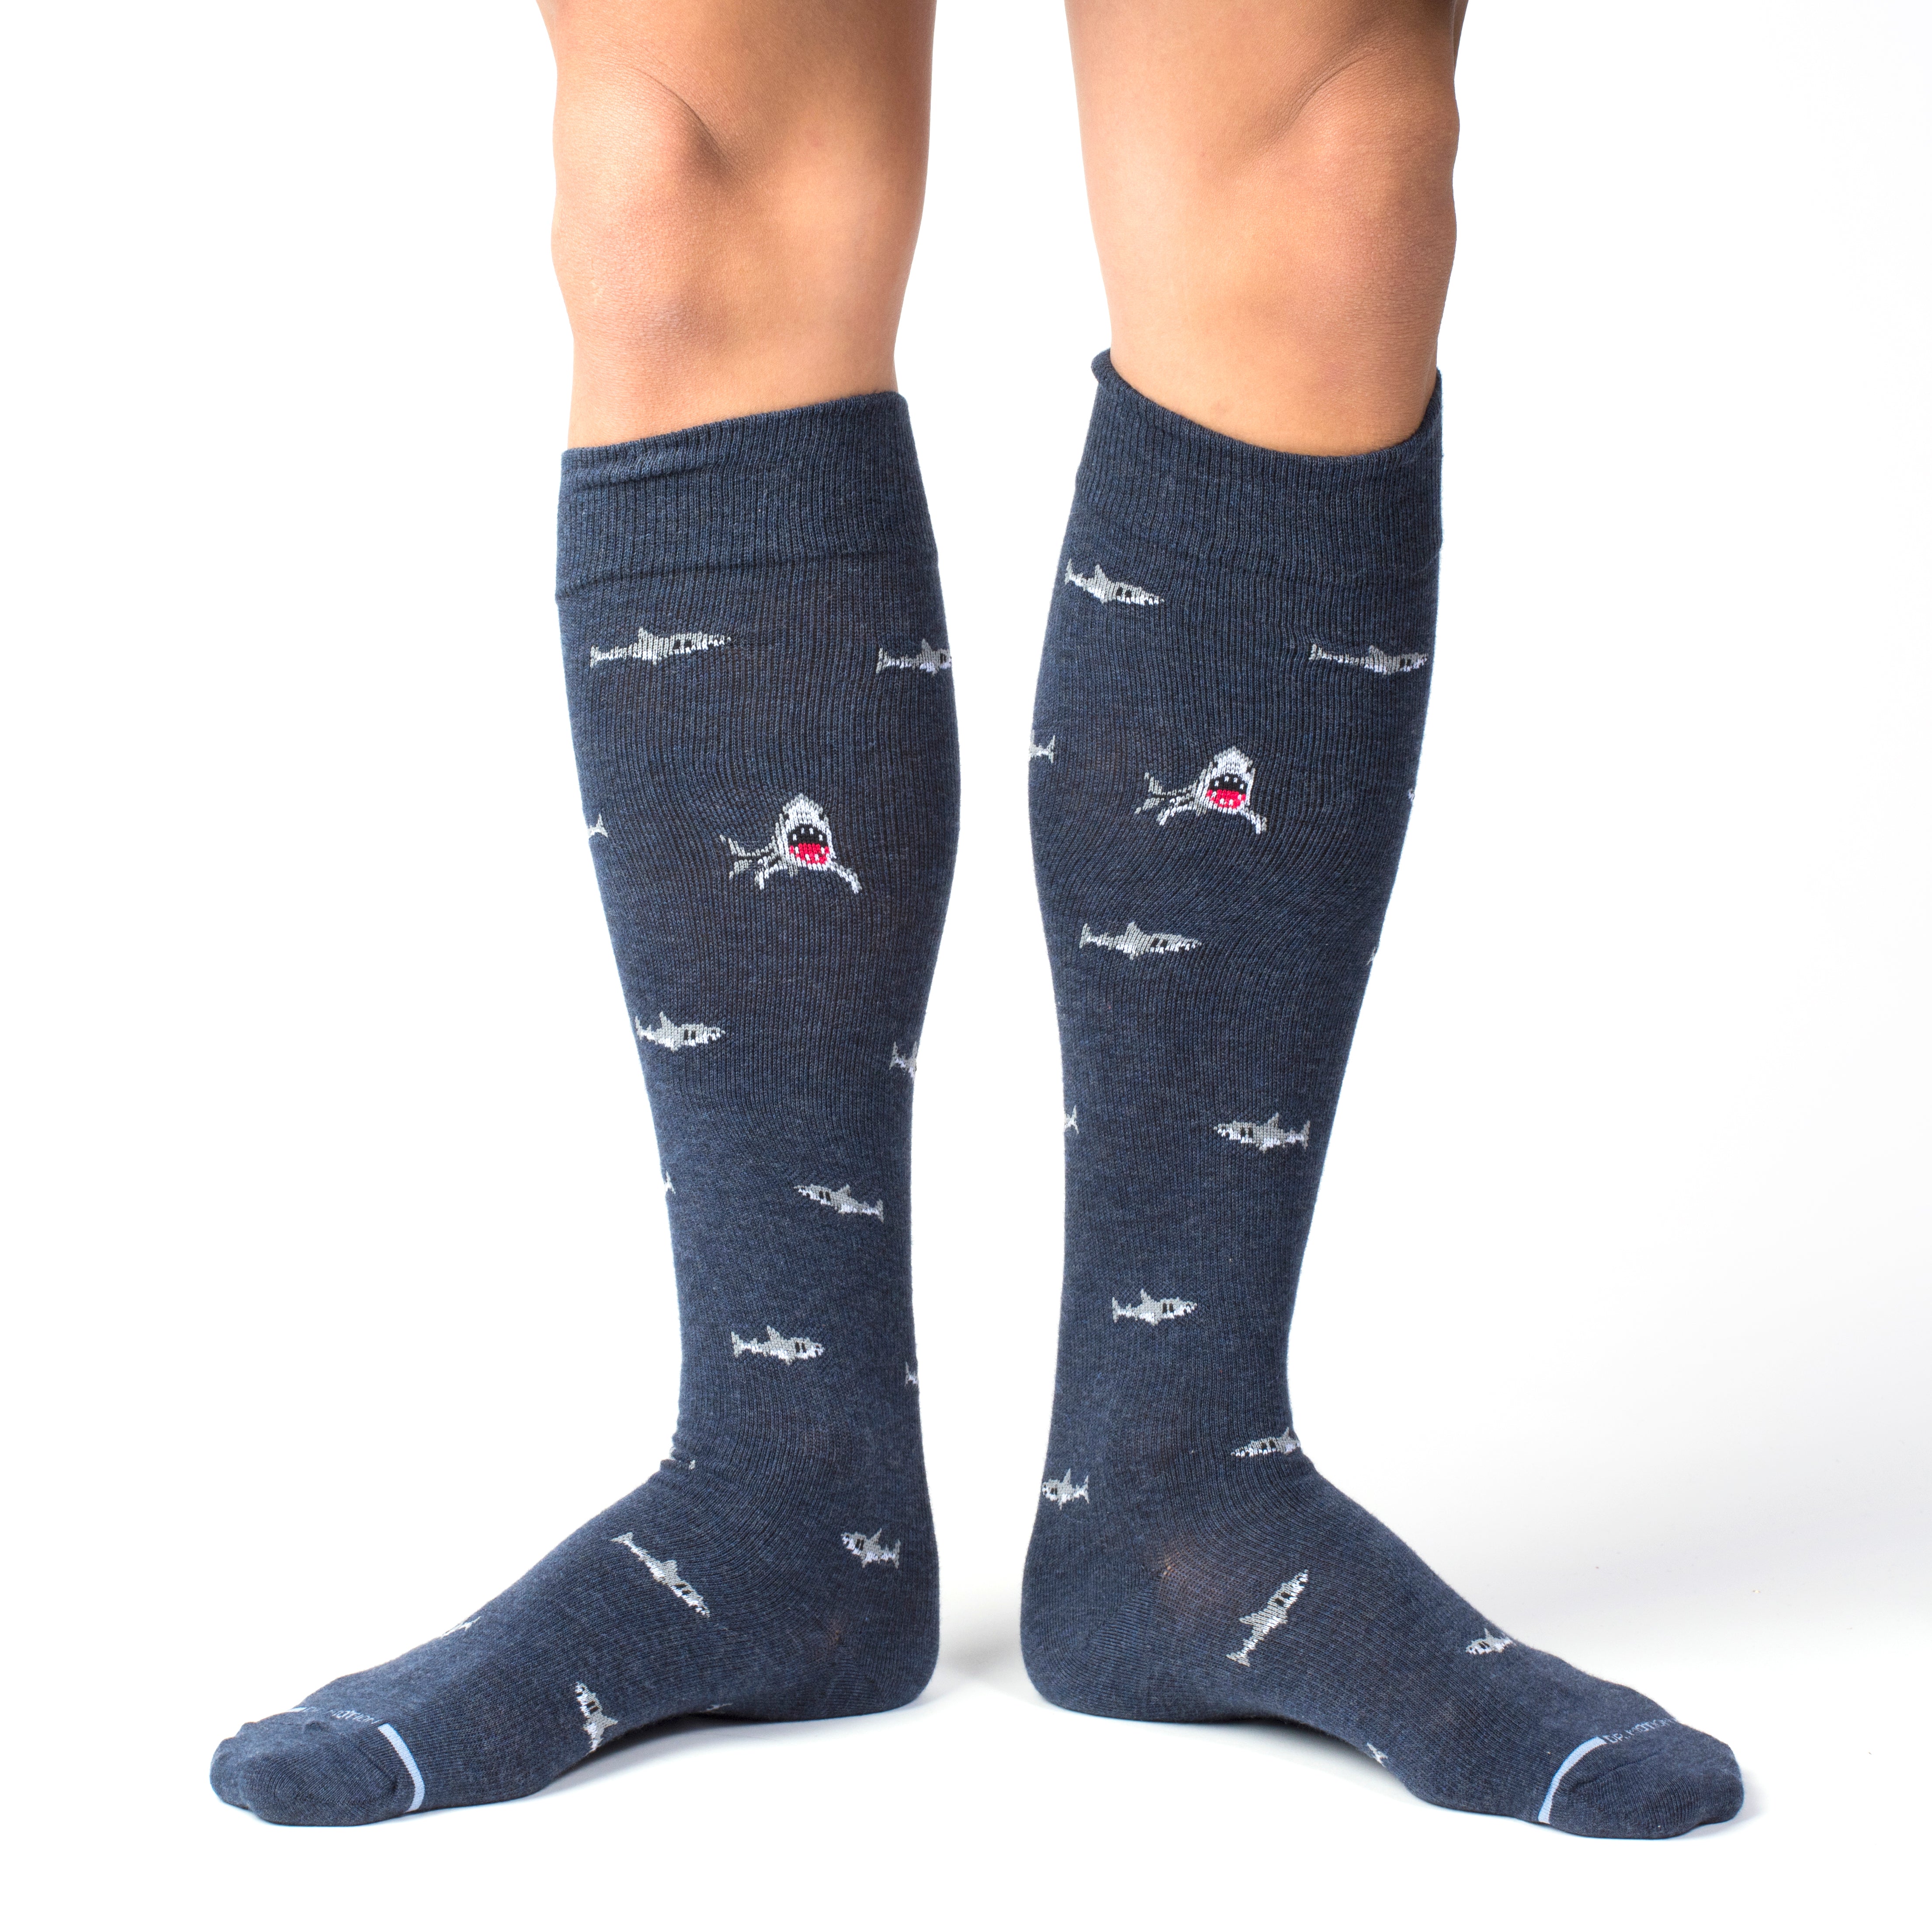 Dr. Motion Plain Knitted Compression Ankle Socks - Black, Men's, Size: One Size